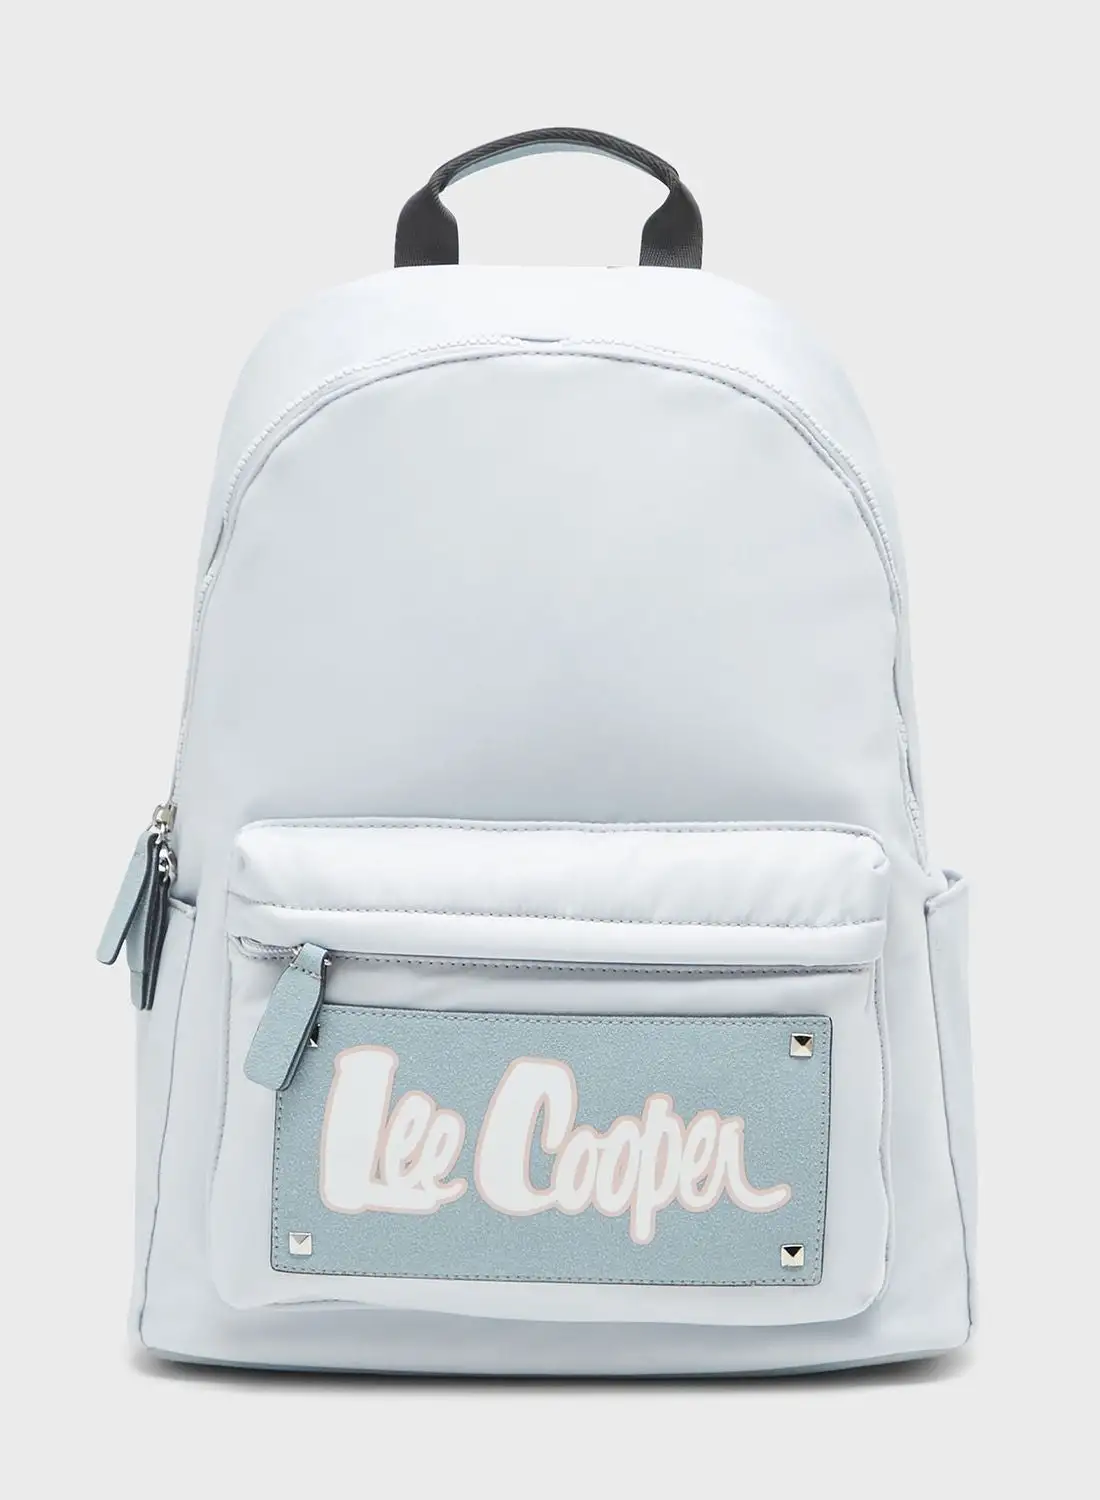 Lee Cooper Top Handle Backpack